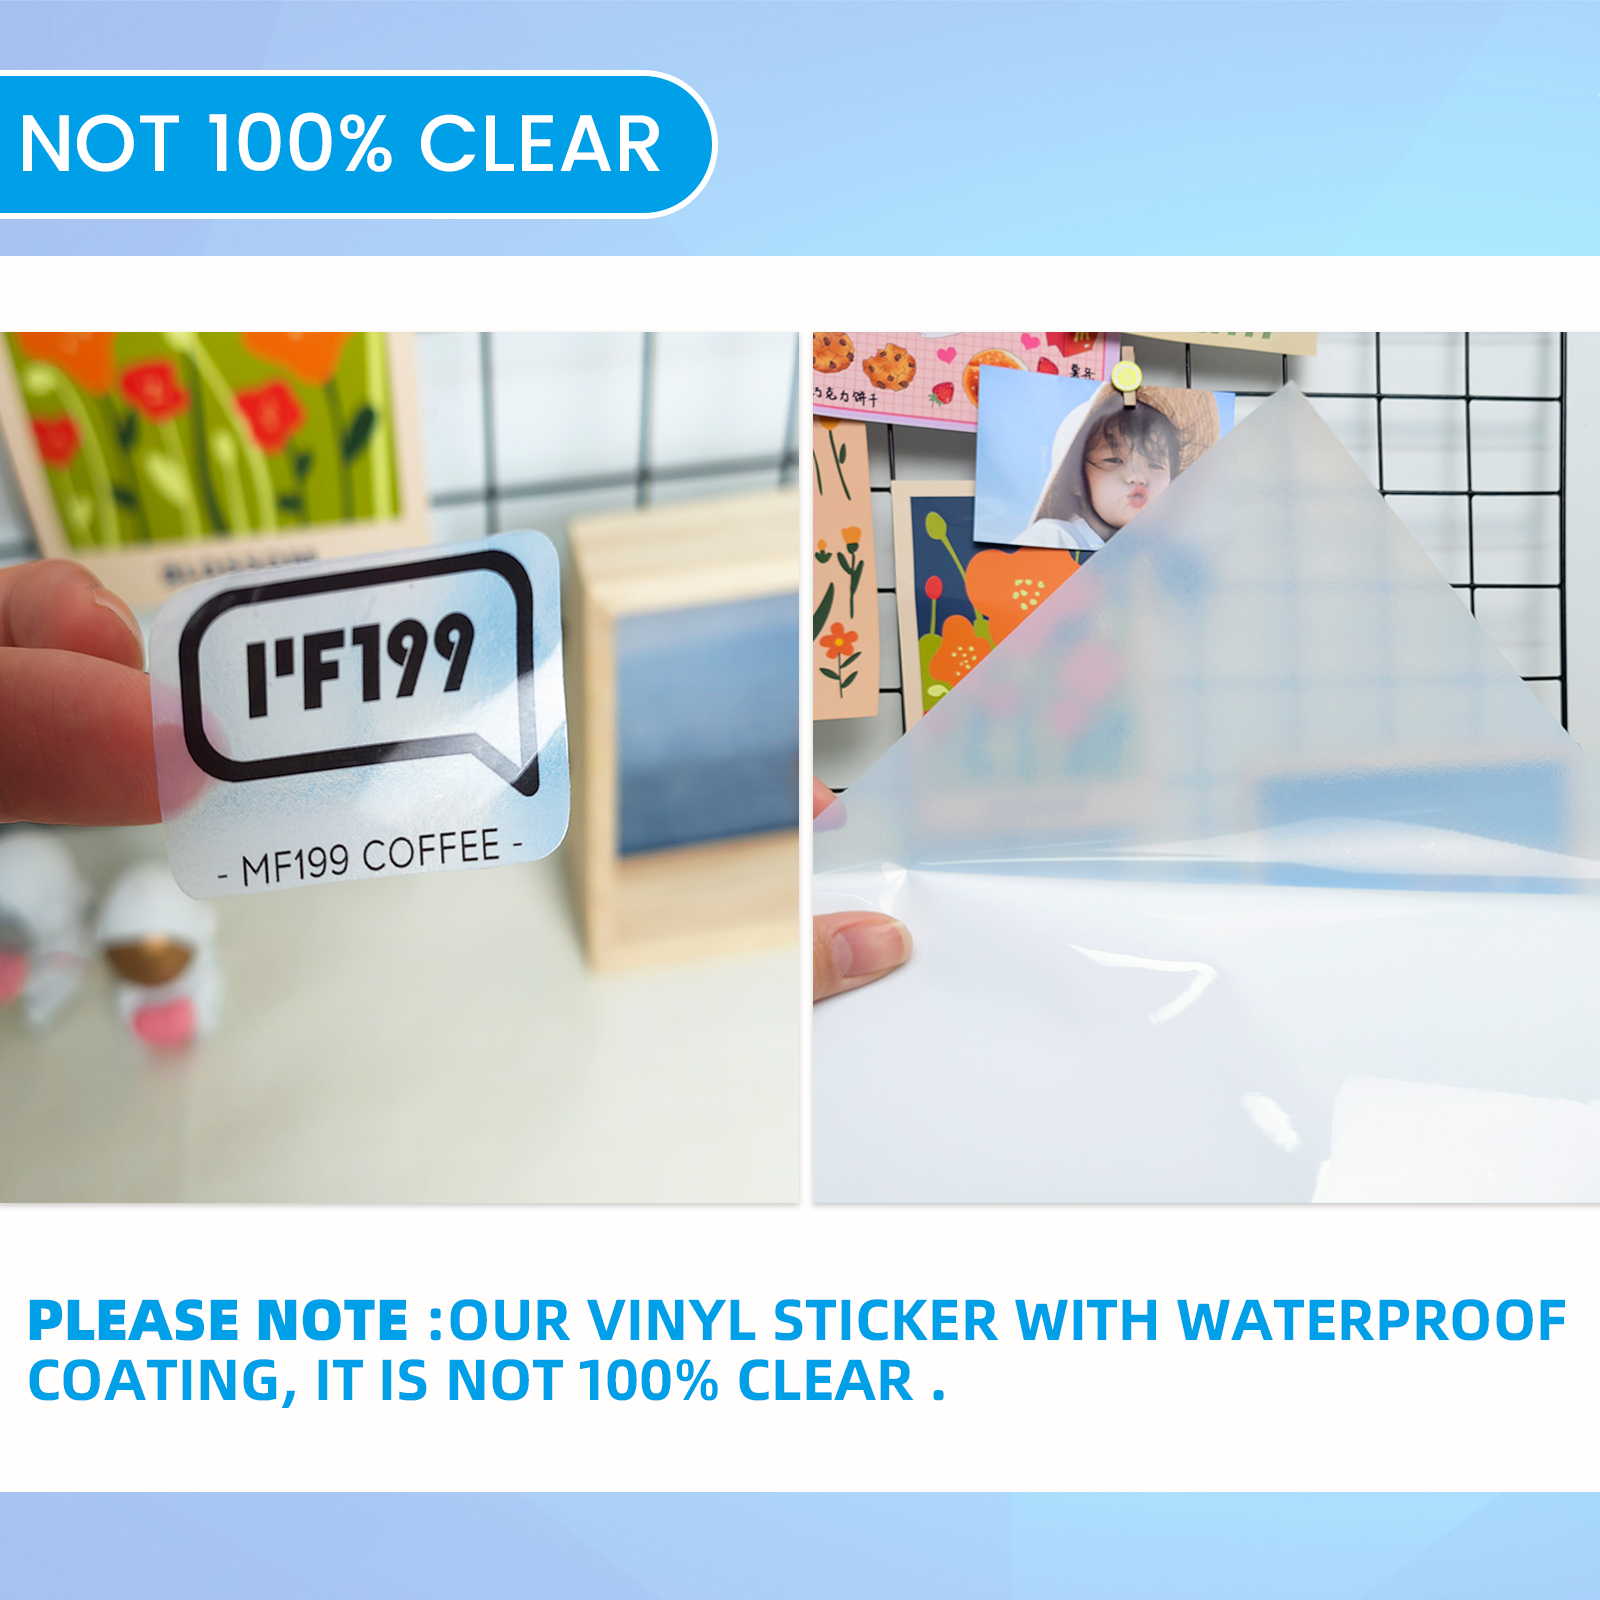 Uinkit Premium Clear Vinyl Sticker Paper for Inkjet Printer - Bulk Pack 100 Sheets  Clear Waterproof